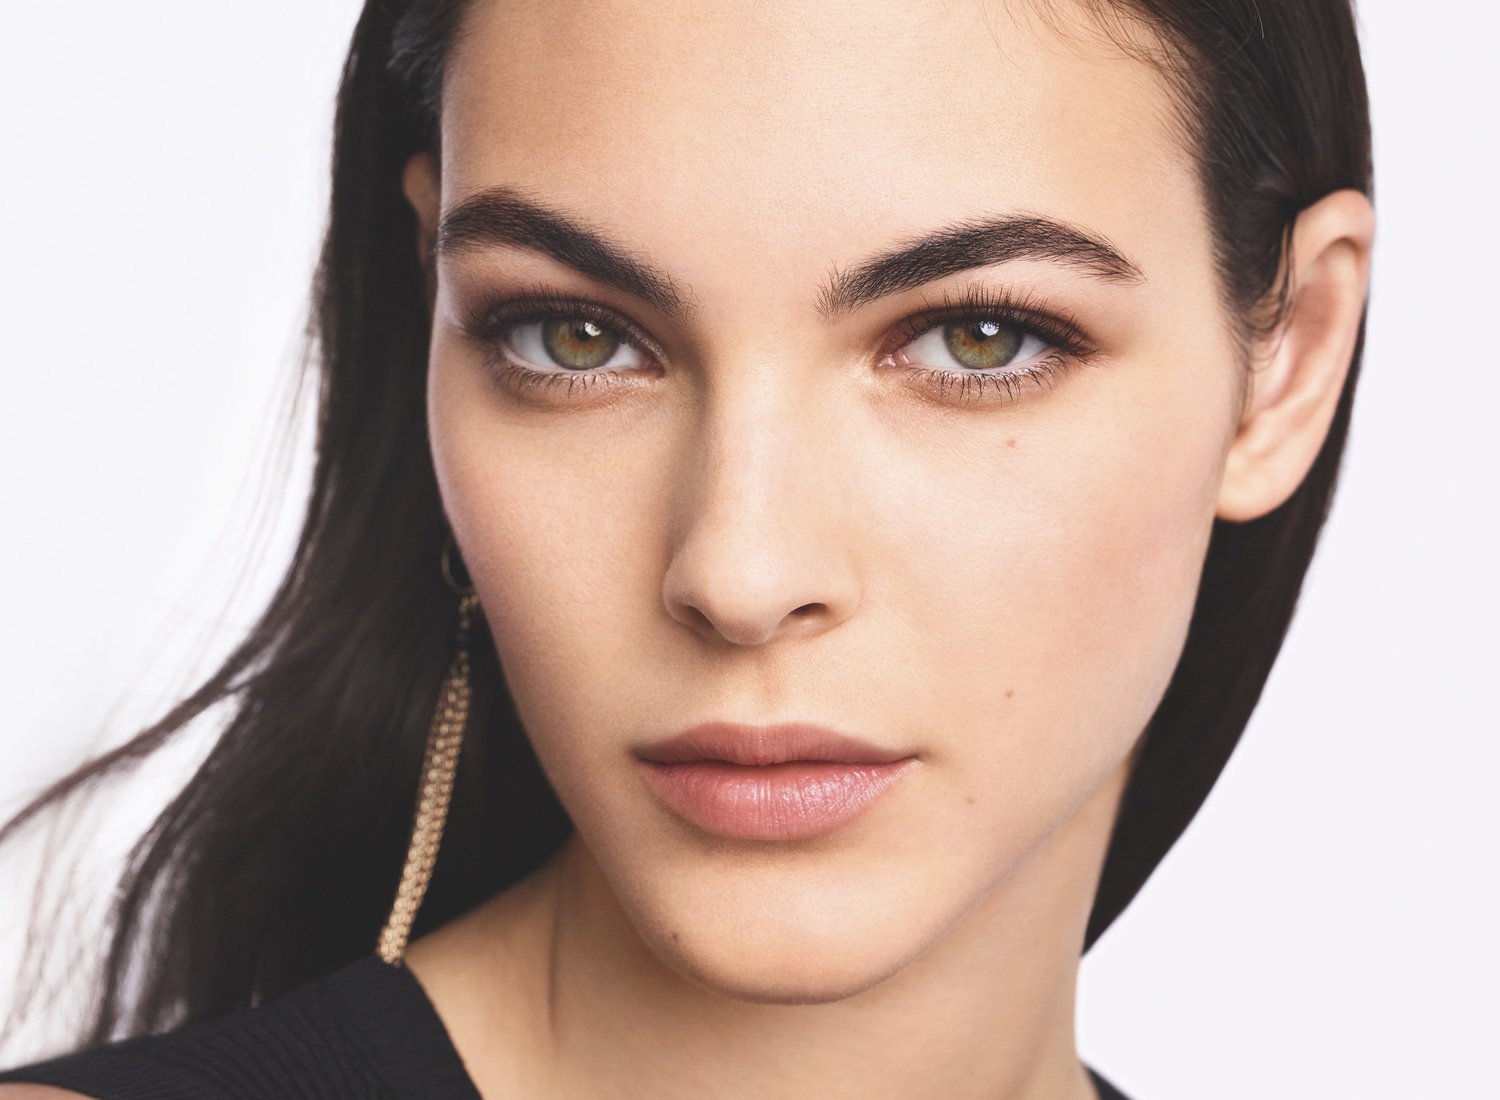 Fab Find of the Week: Chanel Ultra Le Teint Velvet — Beauty Bible